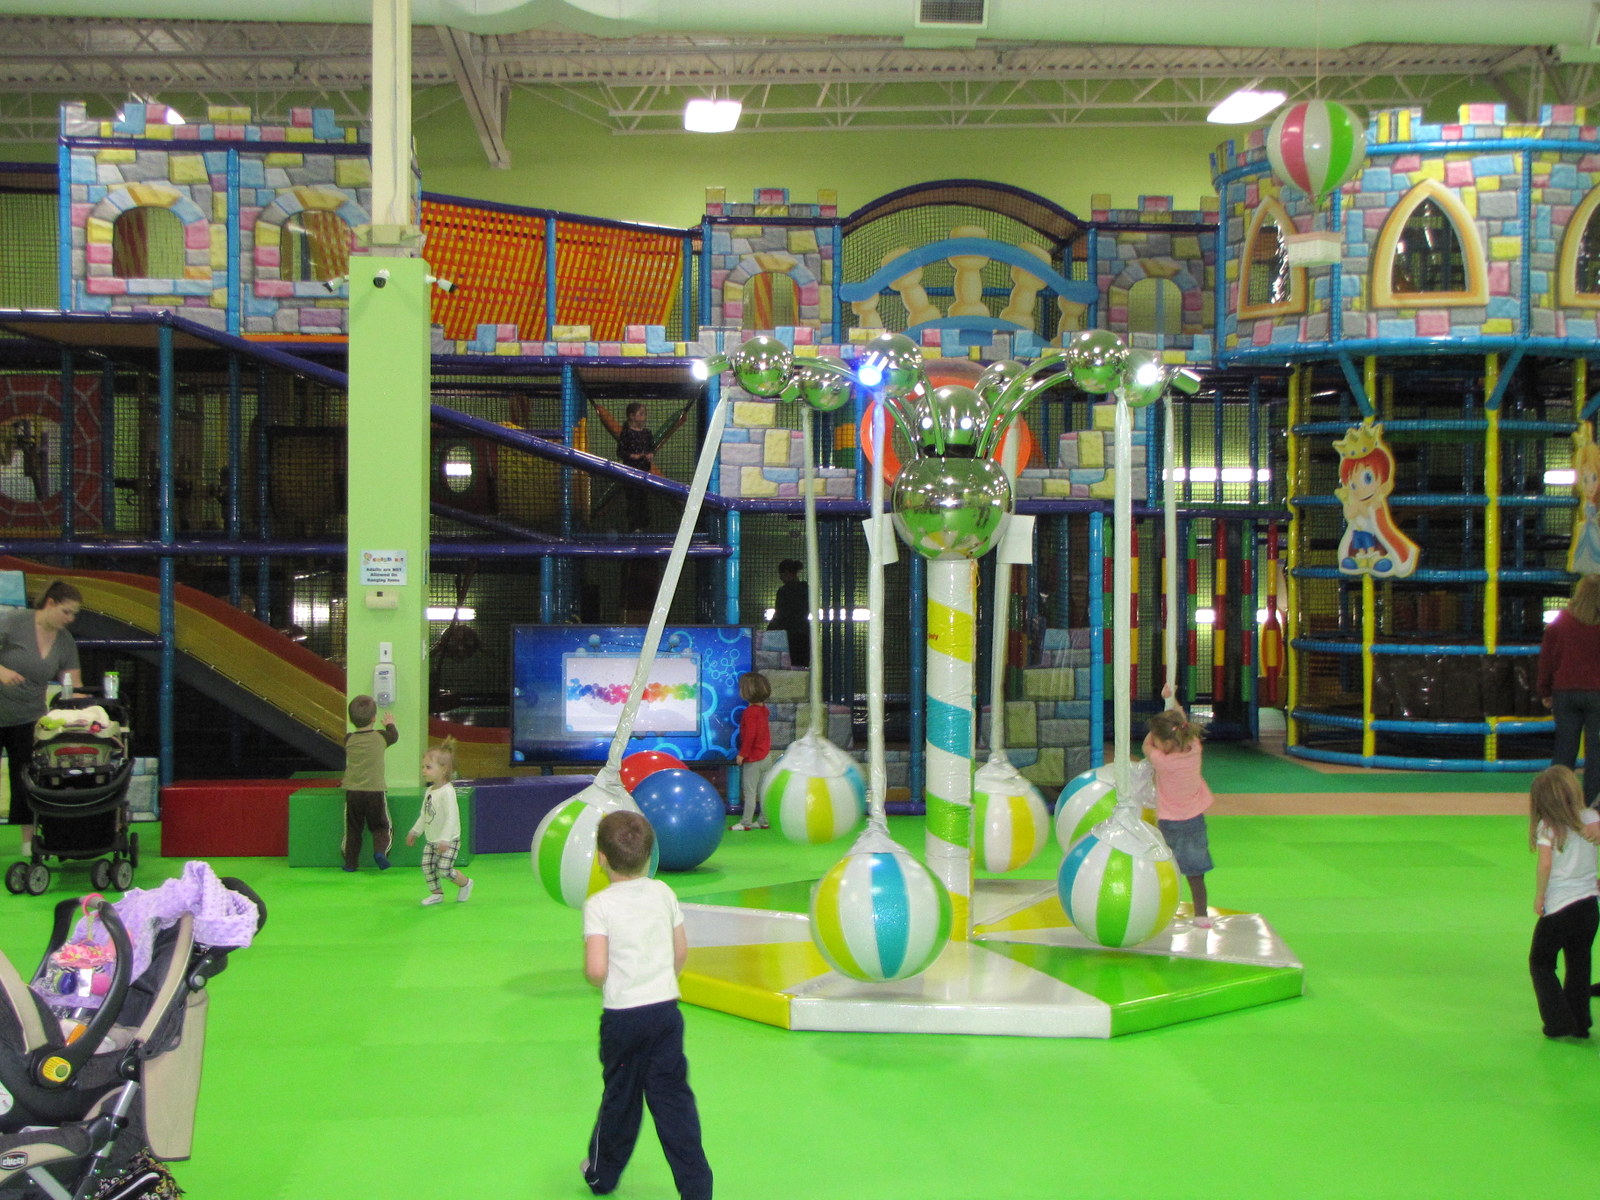 Catch Air Indoor Play Center Now Open in Grand Rapids ...